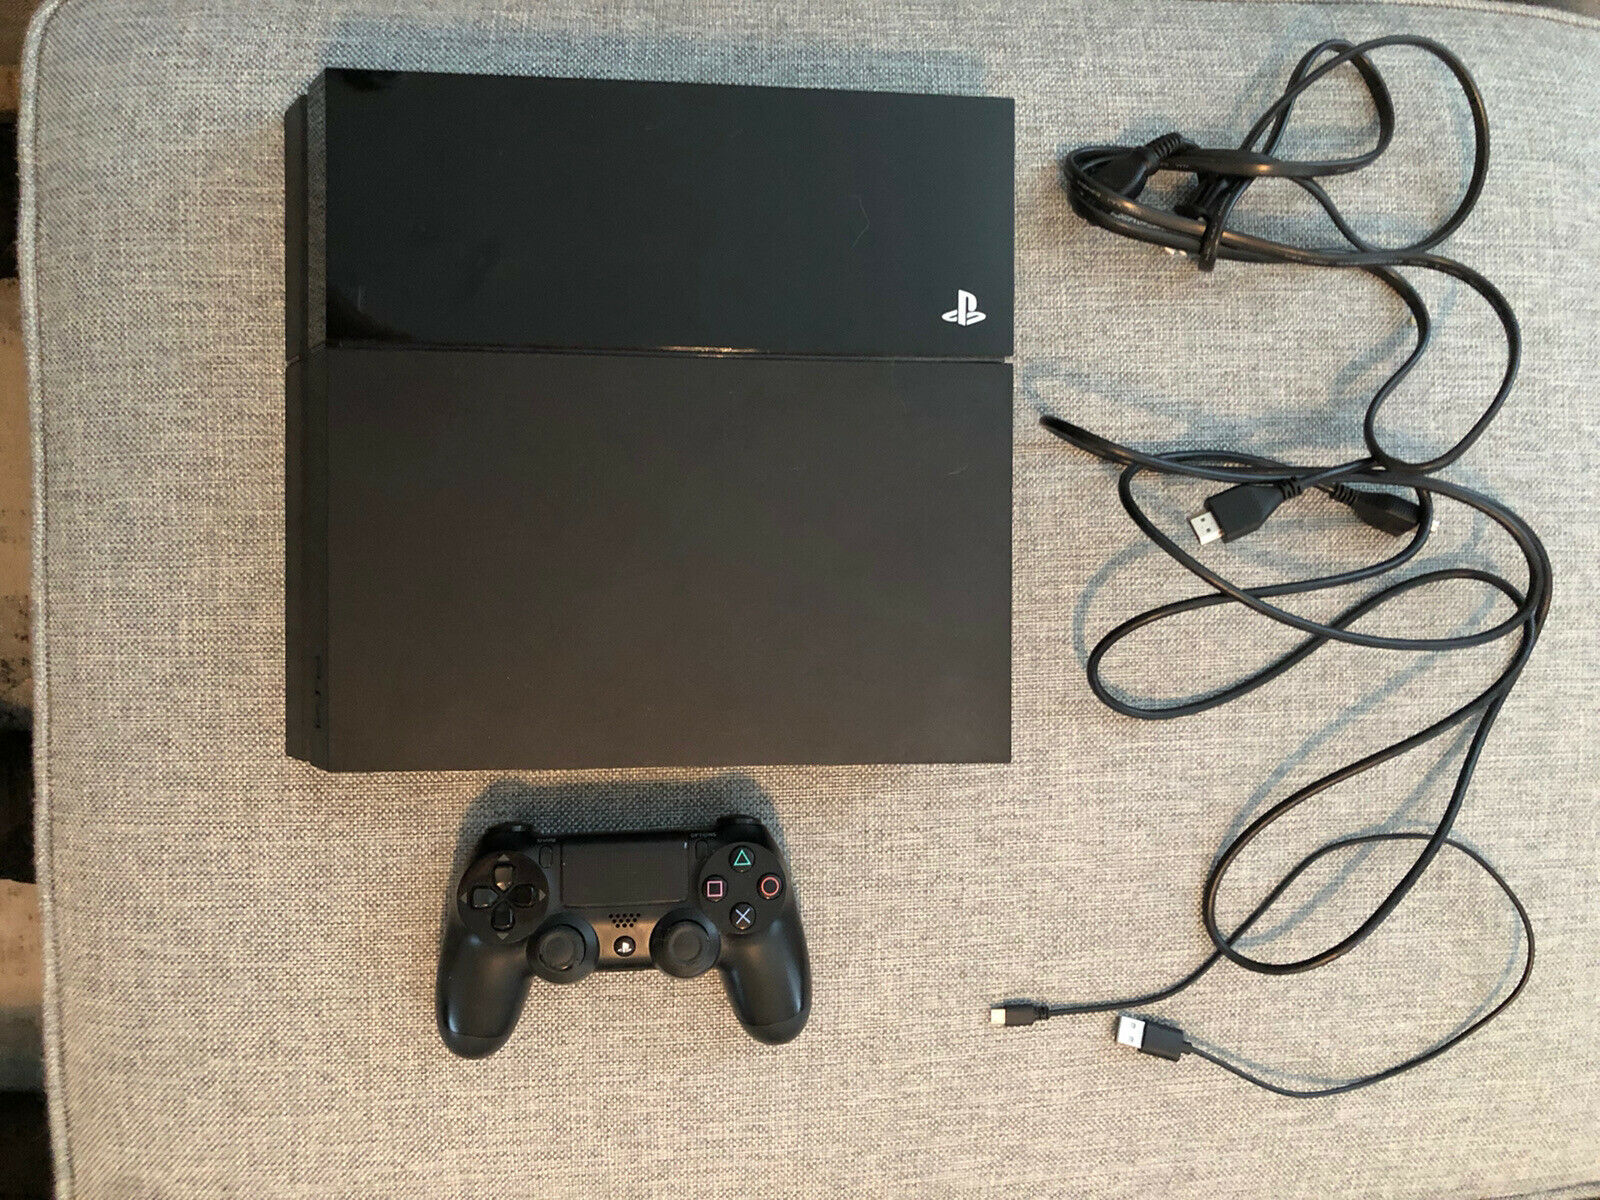 Sony PlayStation 4 500GB Console (USED) - Jet Shaded - iCommerce on Web